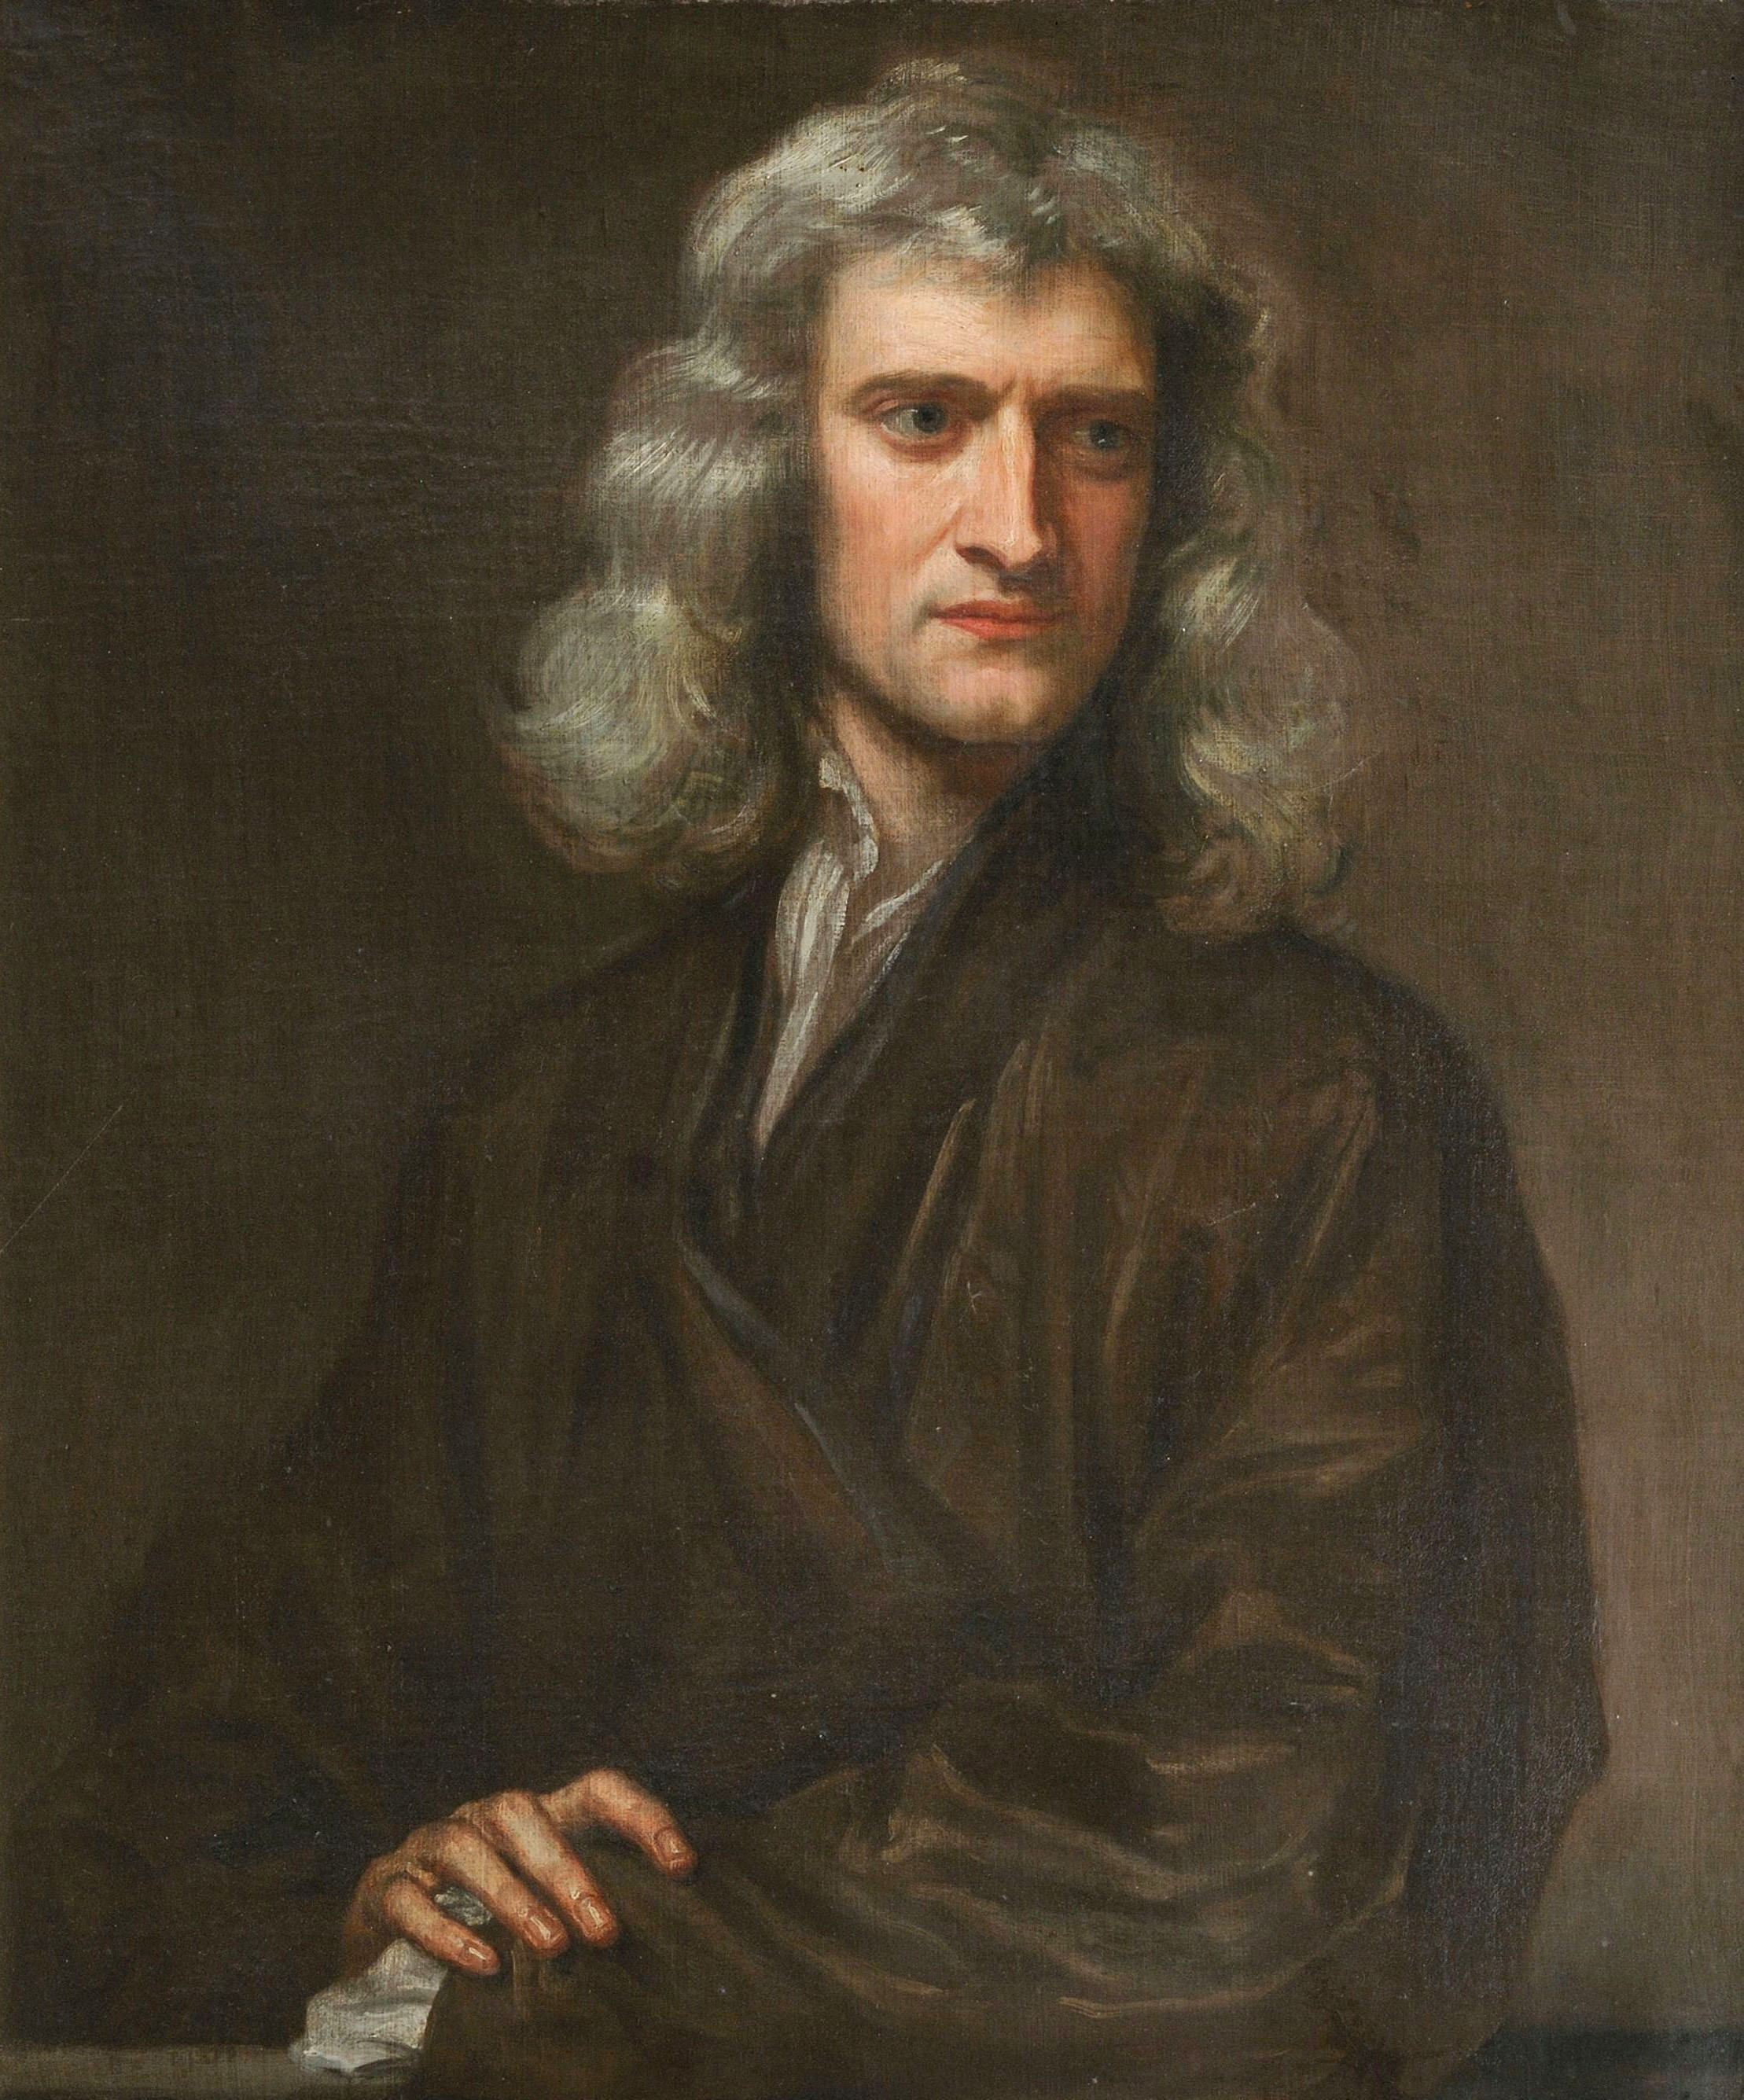 Isaac Newton painting